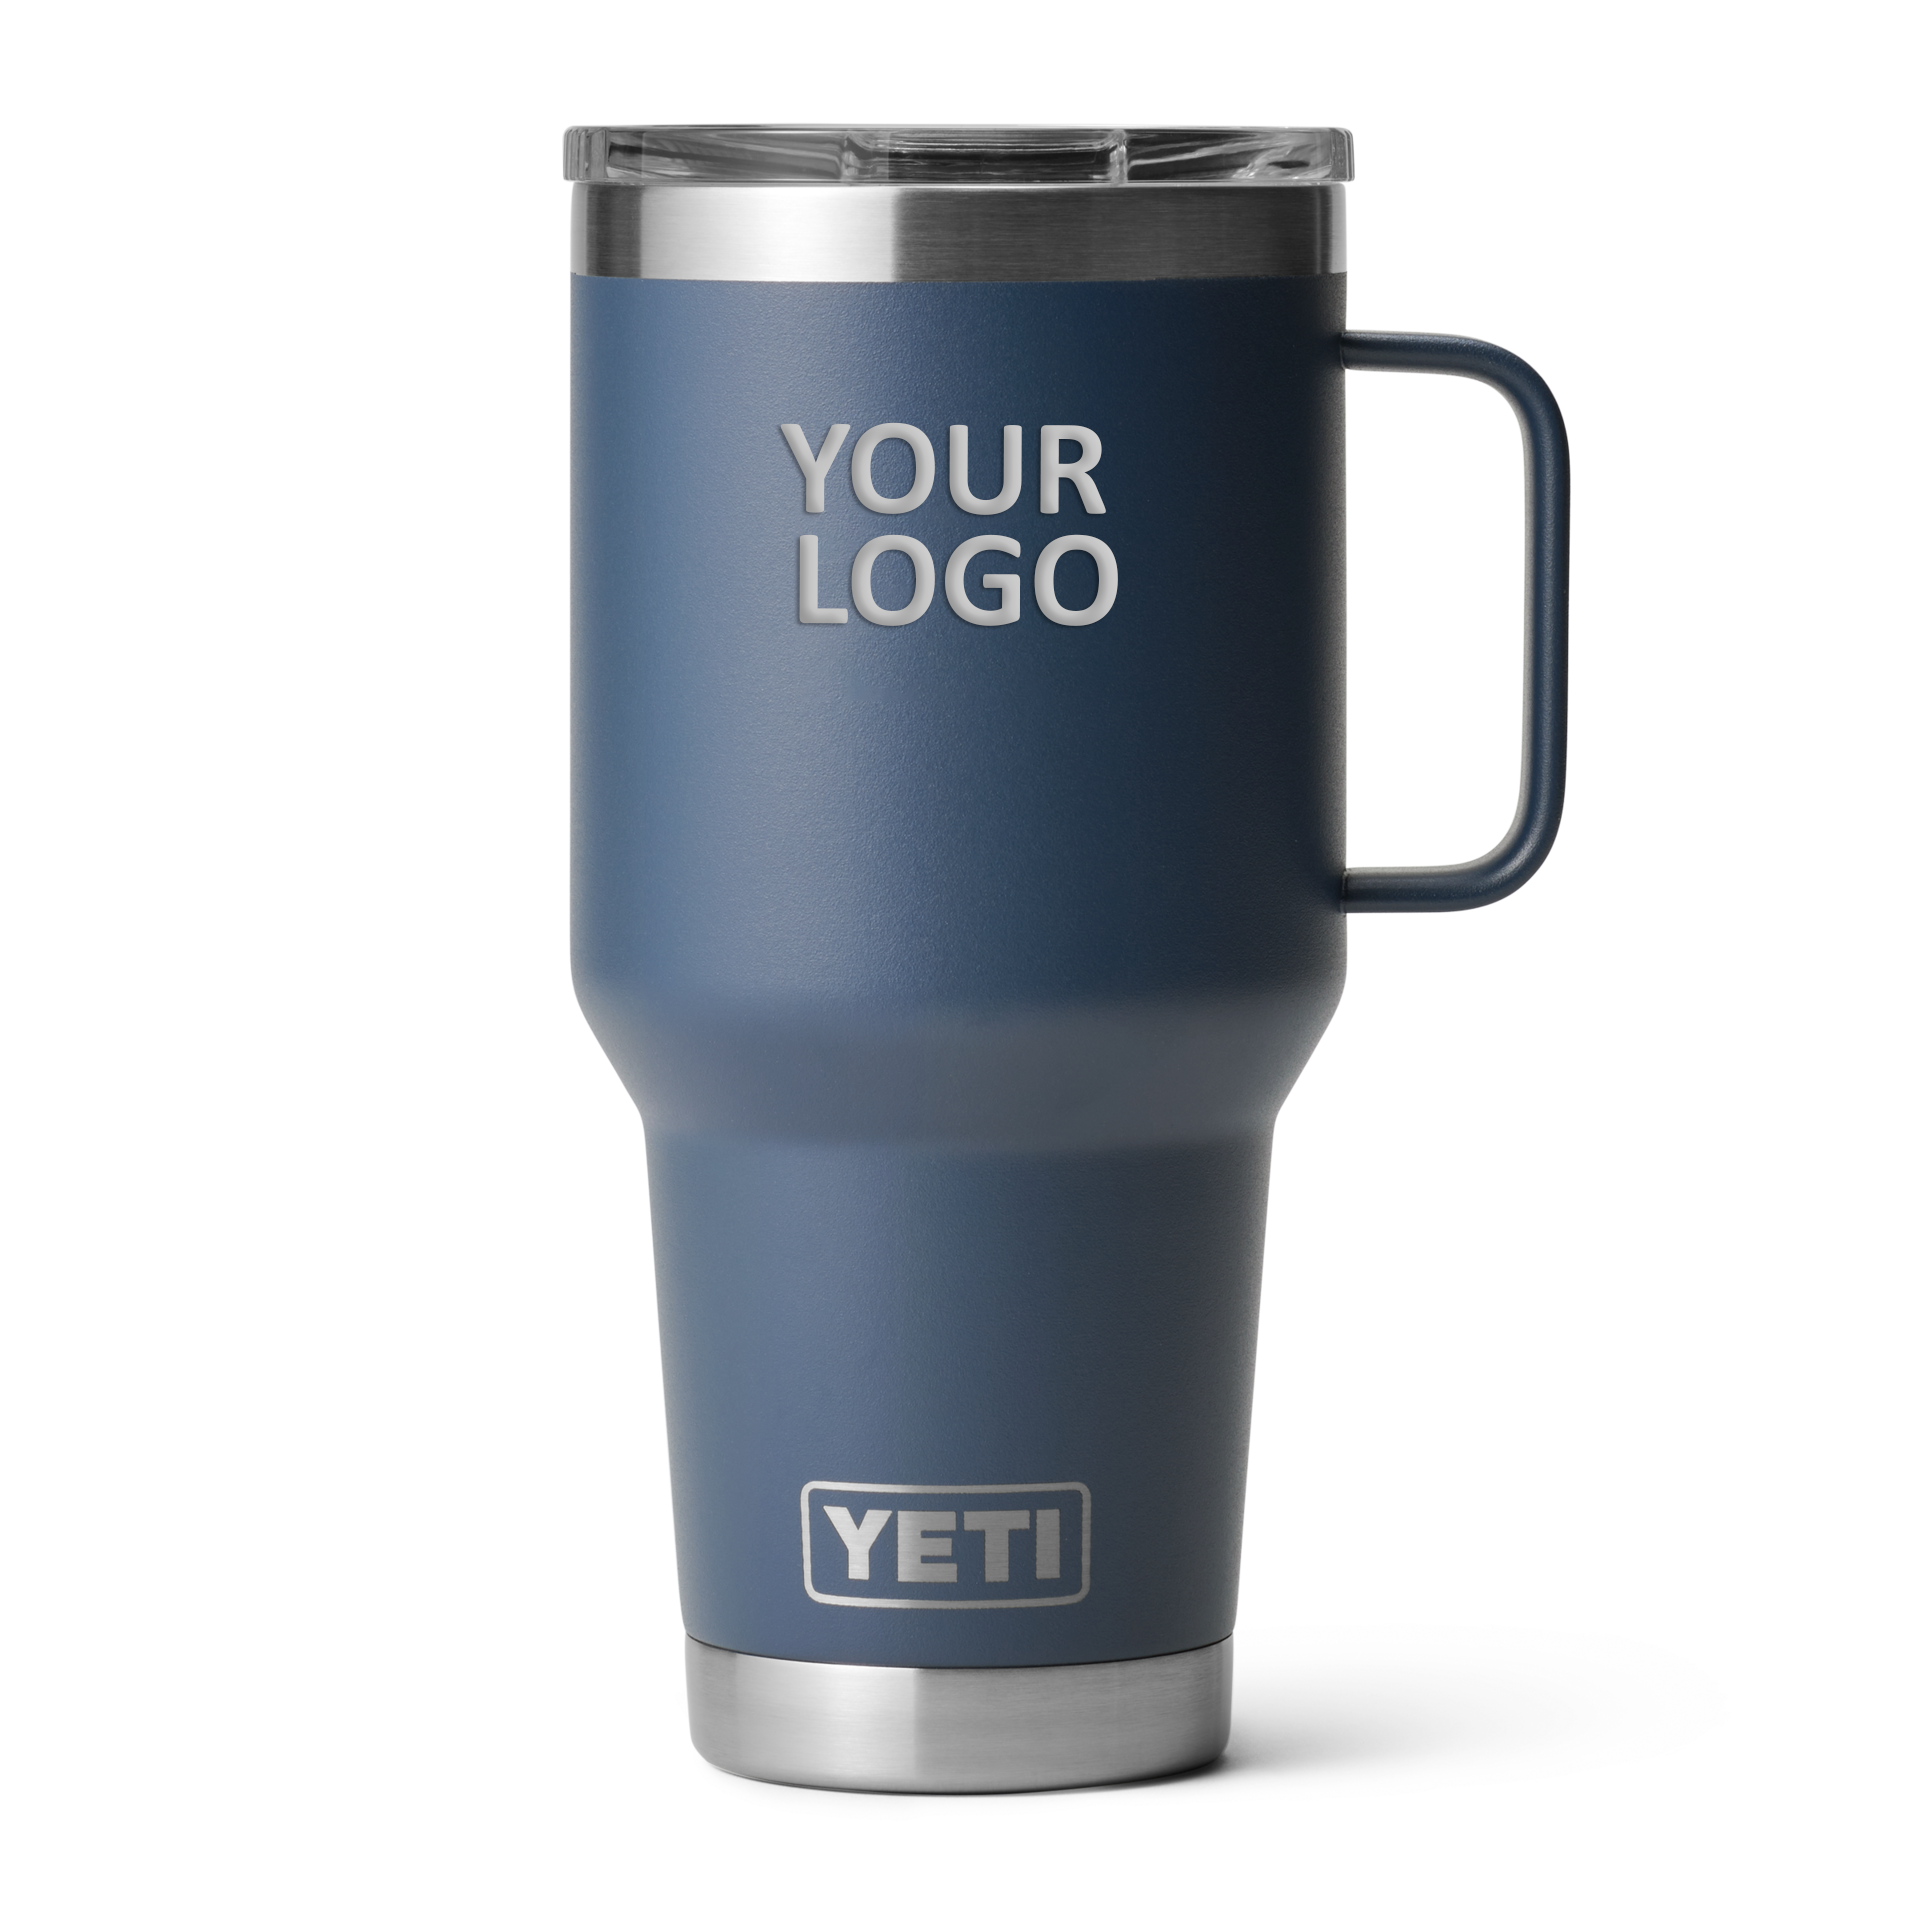 Branded Yeti Rambler 30 Oz Travel Mug With Stronghold Lid, Navy